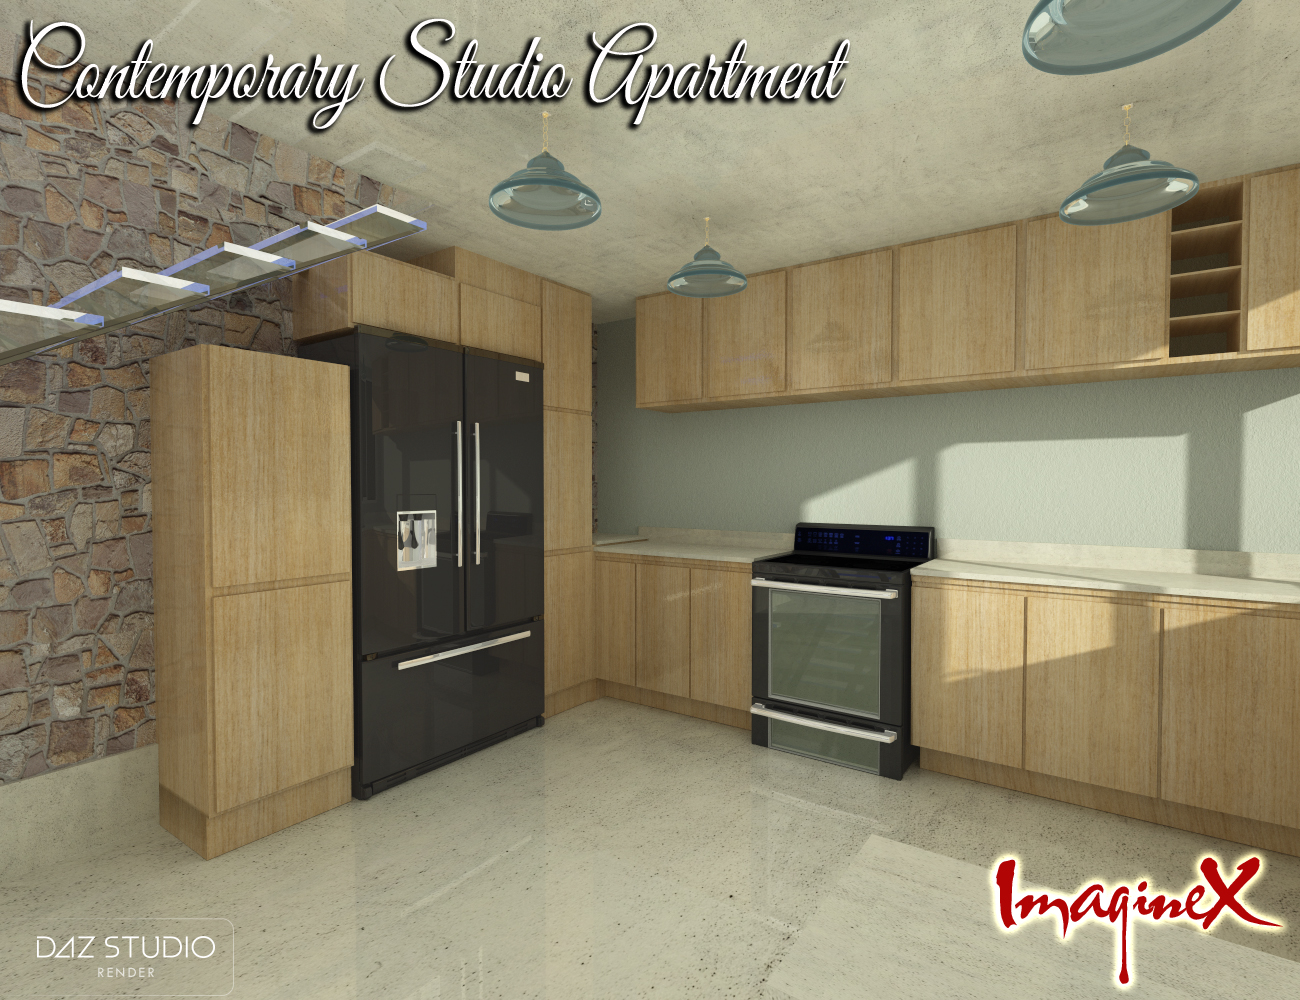 Contemporary Studio Apartment by: ImagineX, 3D Models by Daz 3D